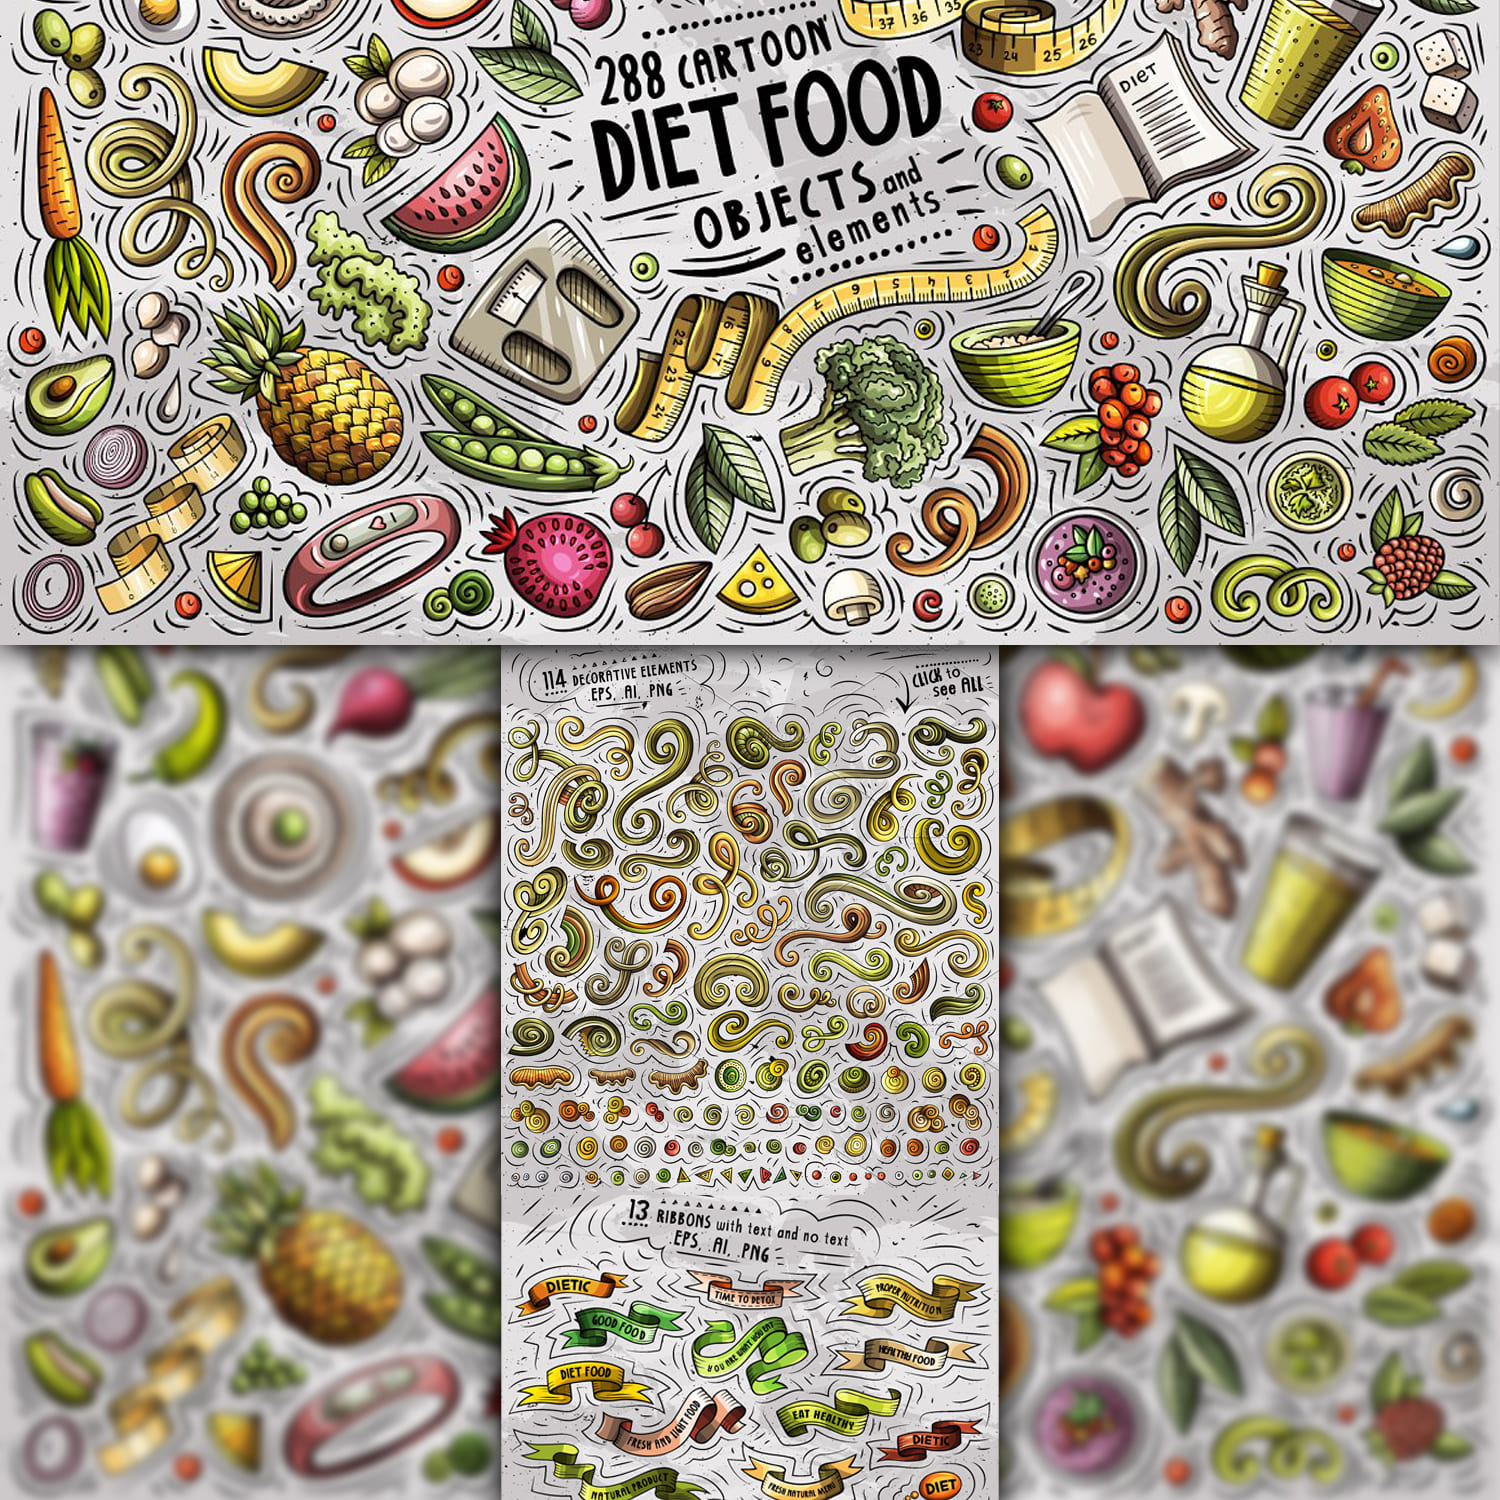 Diet Food Cartoon Vector Objects Set 1500 1500 2.